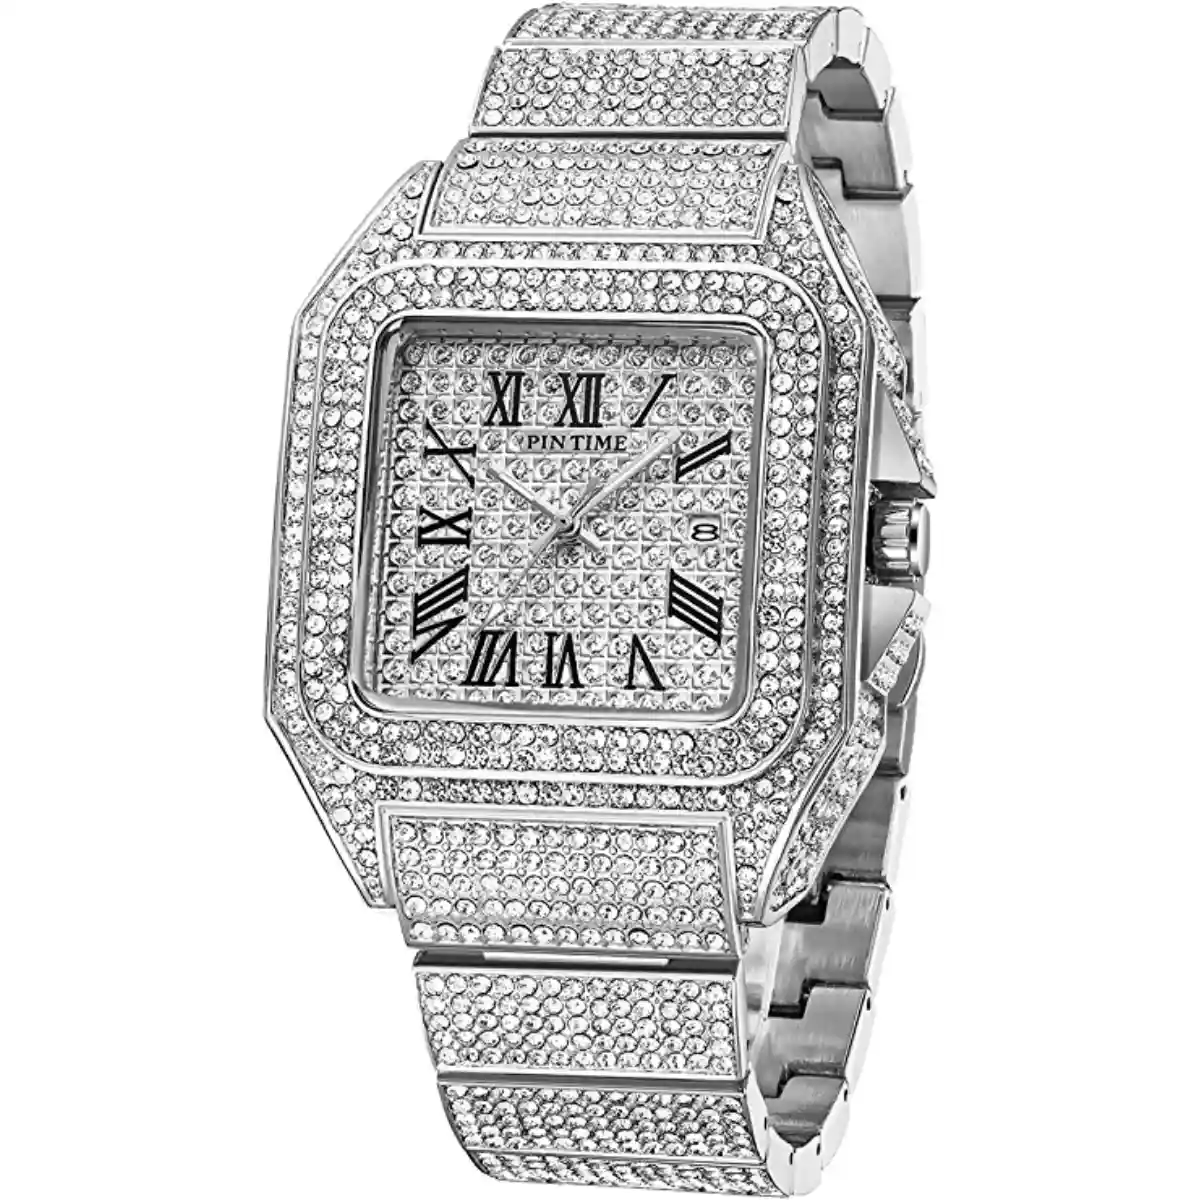 Cartier santos watch dupe amazon